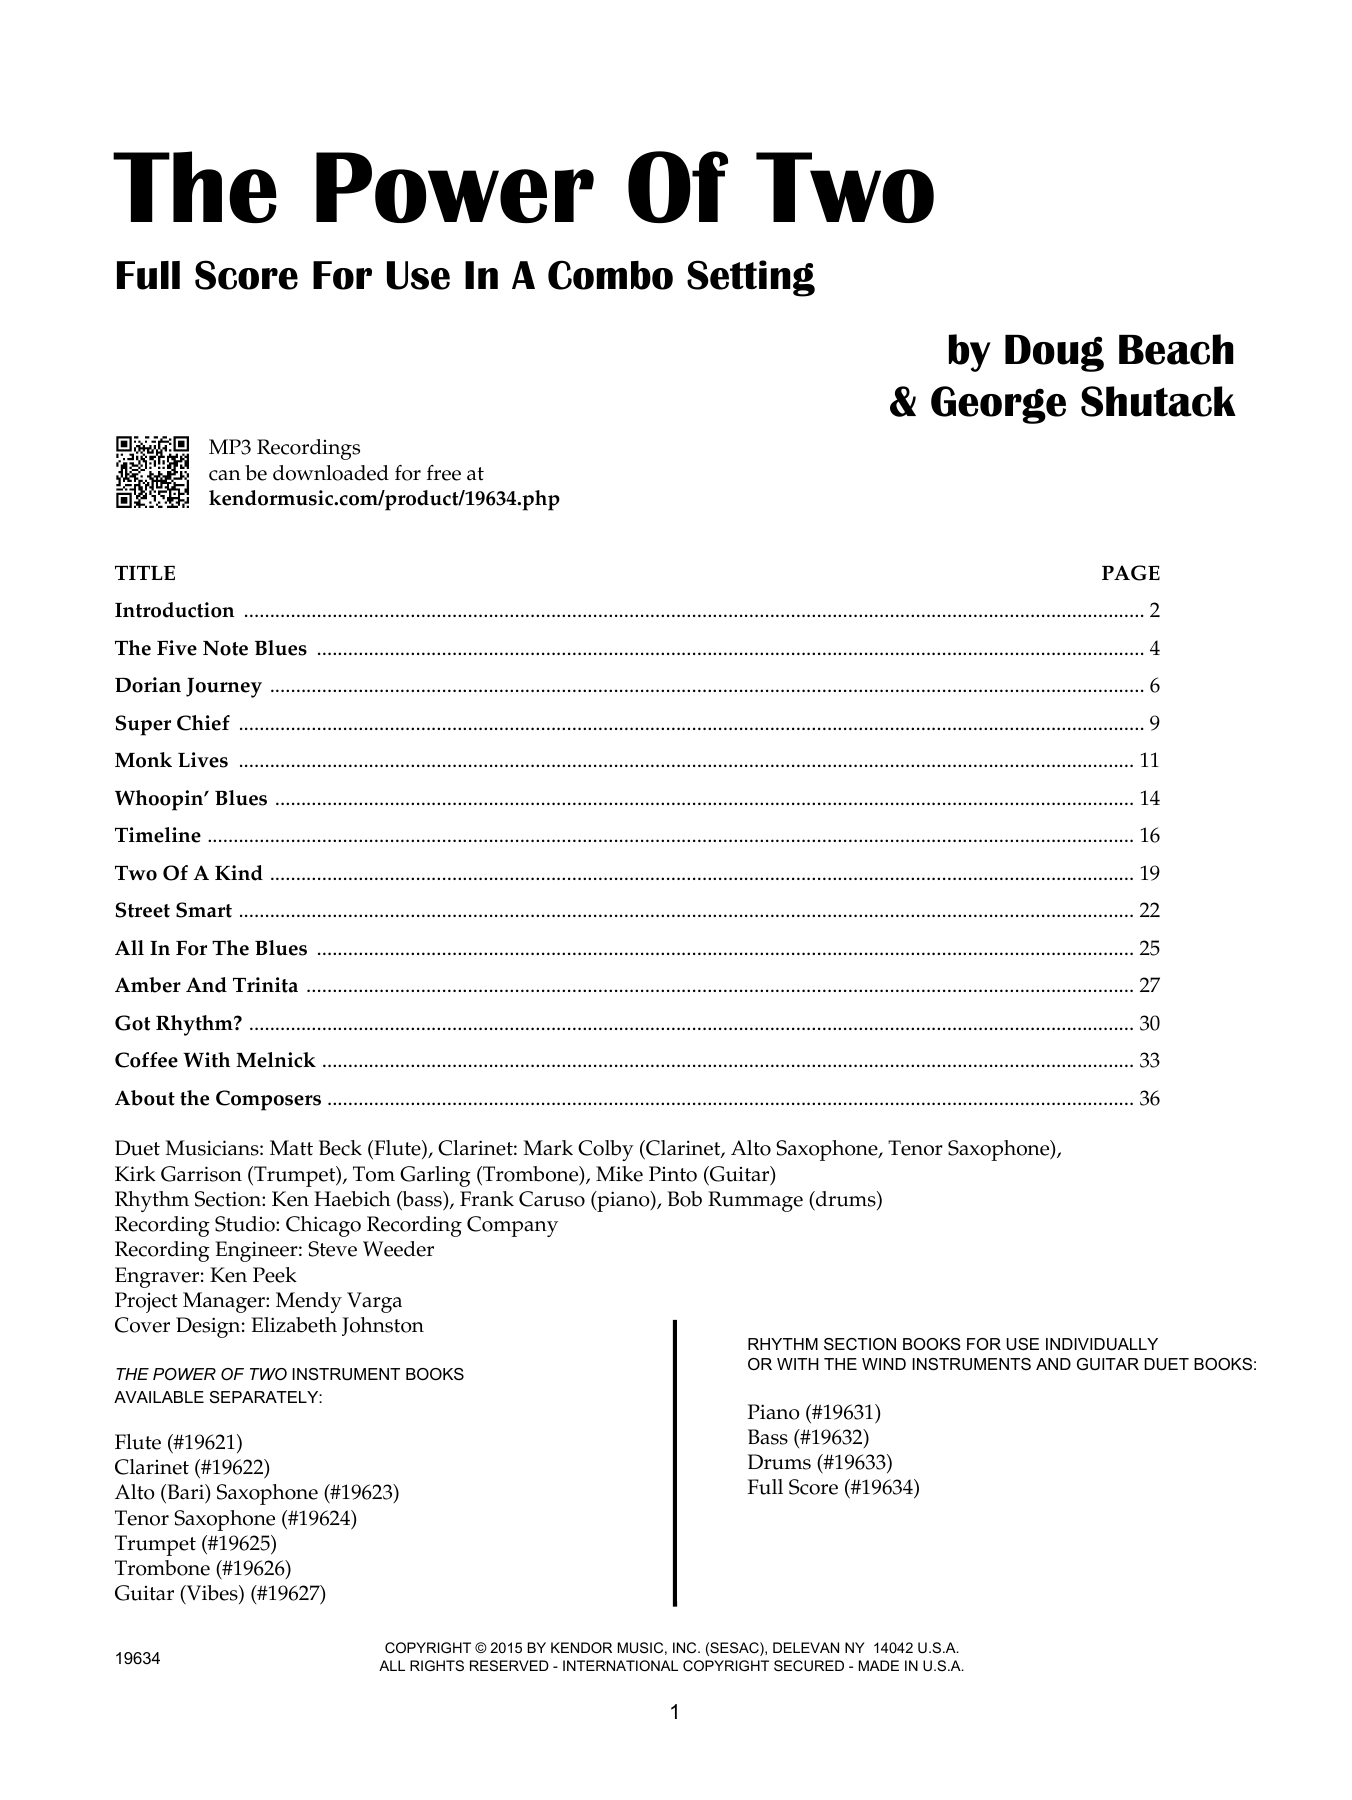 Download Doug Beach & George Shutack The Power Of Two - Full Score - Full Sc Sheet Music